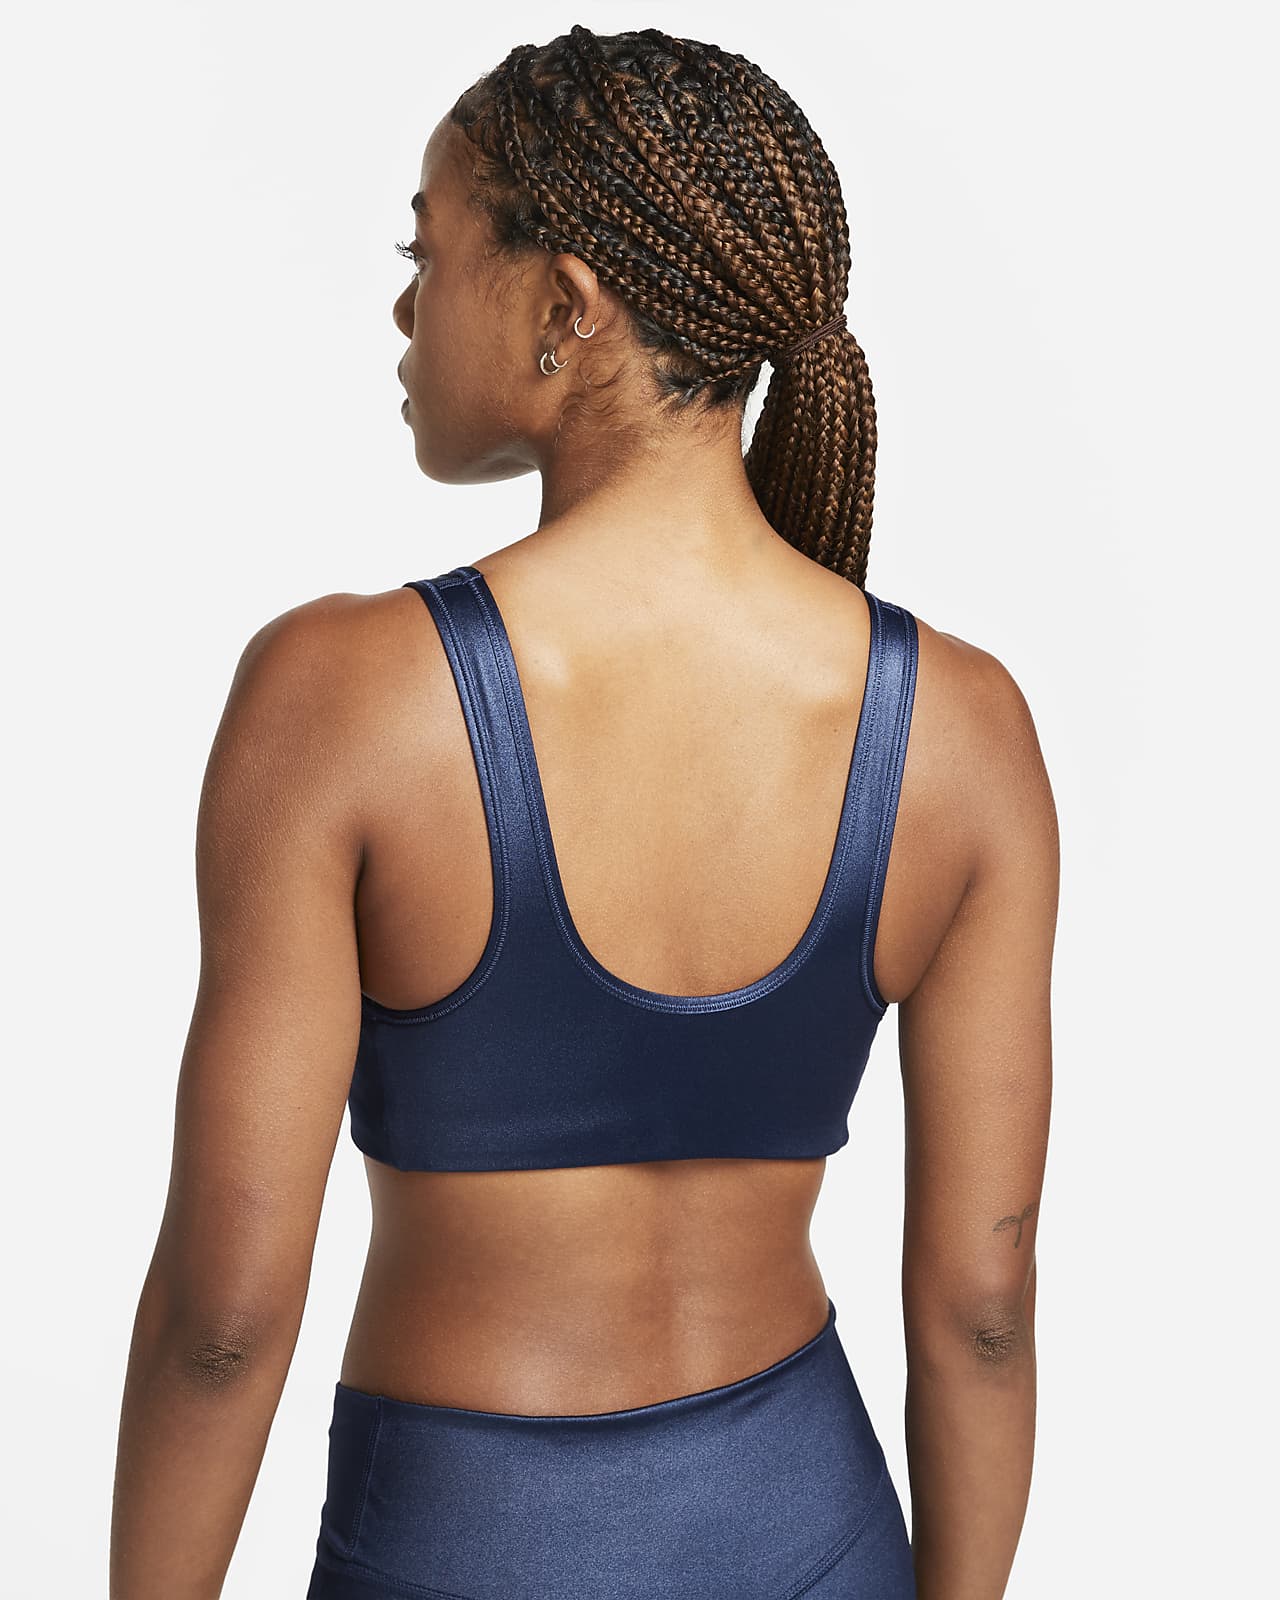 Nike Nike Swoosh Women's Medium-Support Pro Sports Bra - Black $ 30